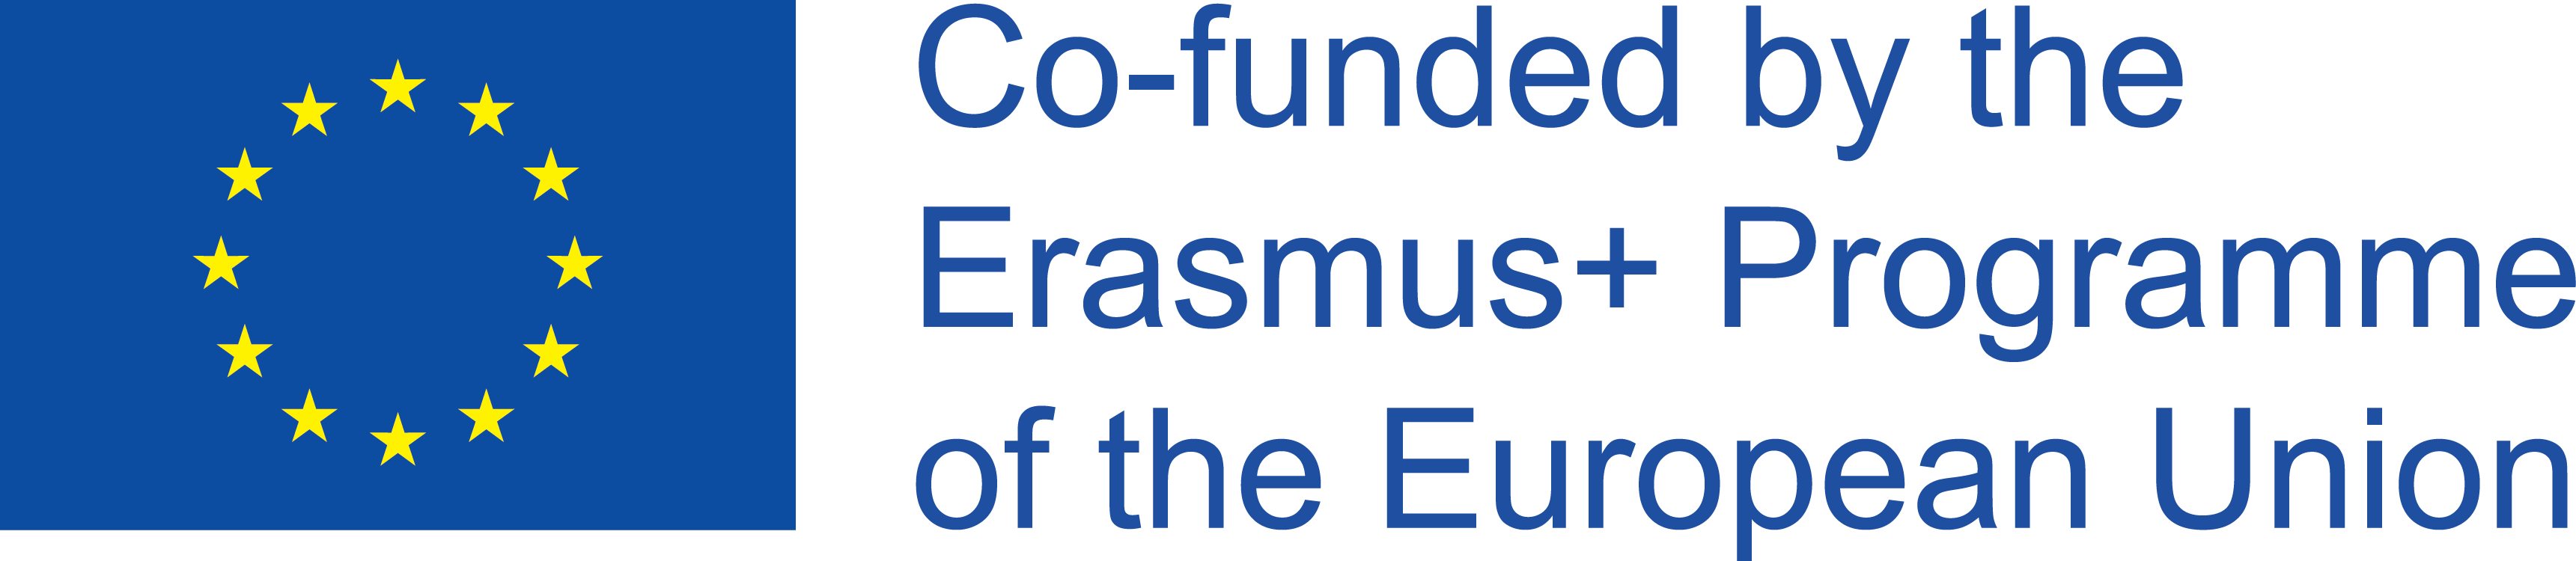 Ko-finansiá pa e programa di Erasmus+ di Union Europeo